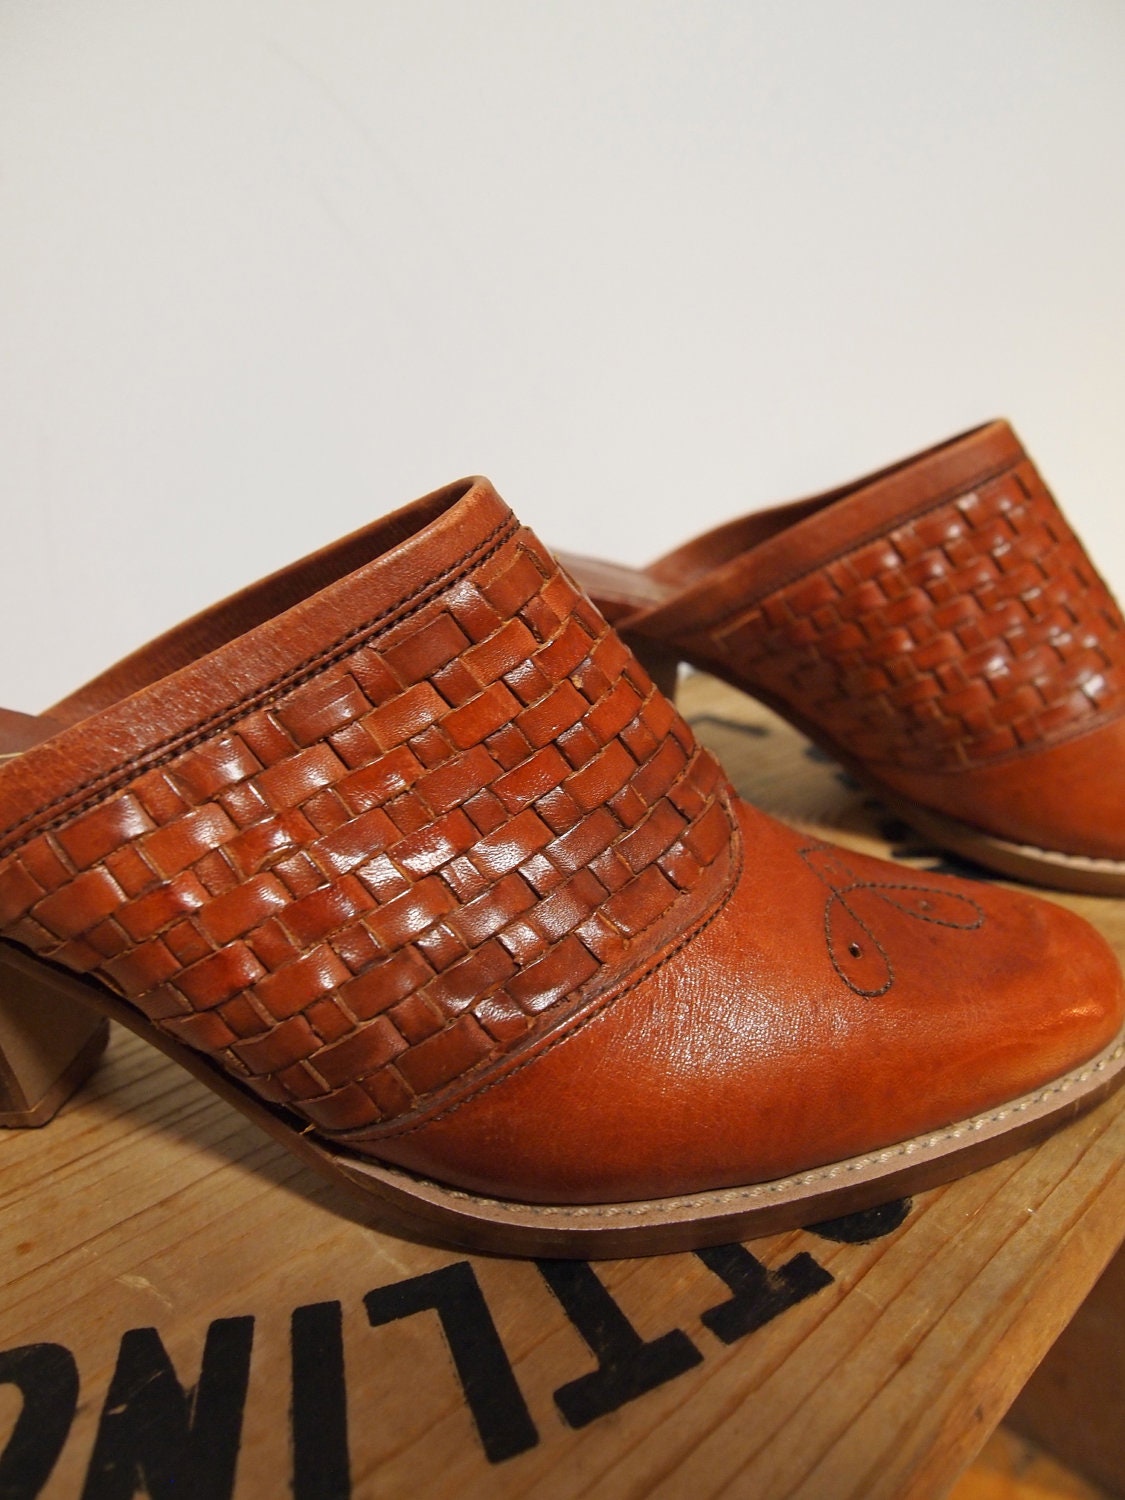 Women's Vintage Shoes. Woven Leather Clogs